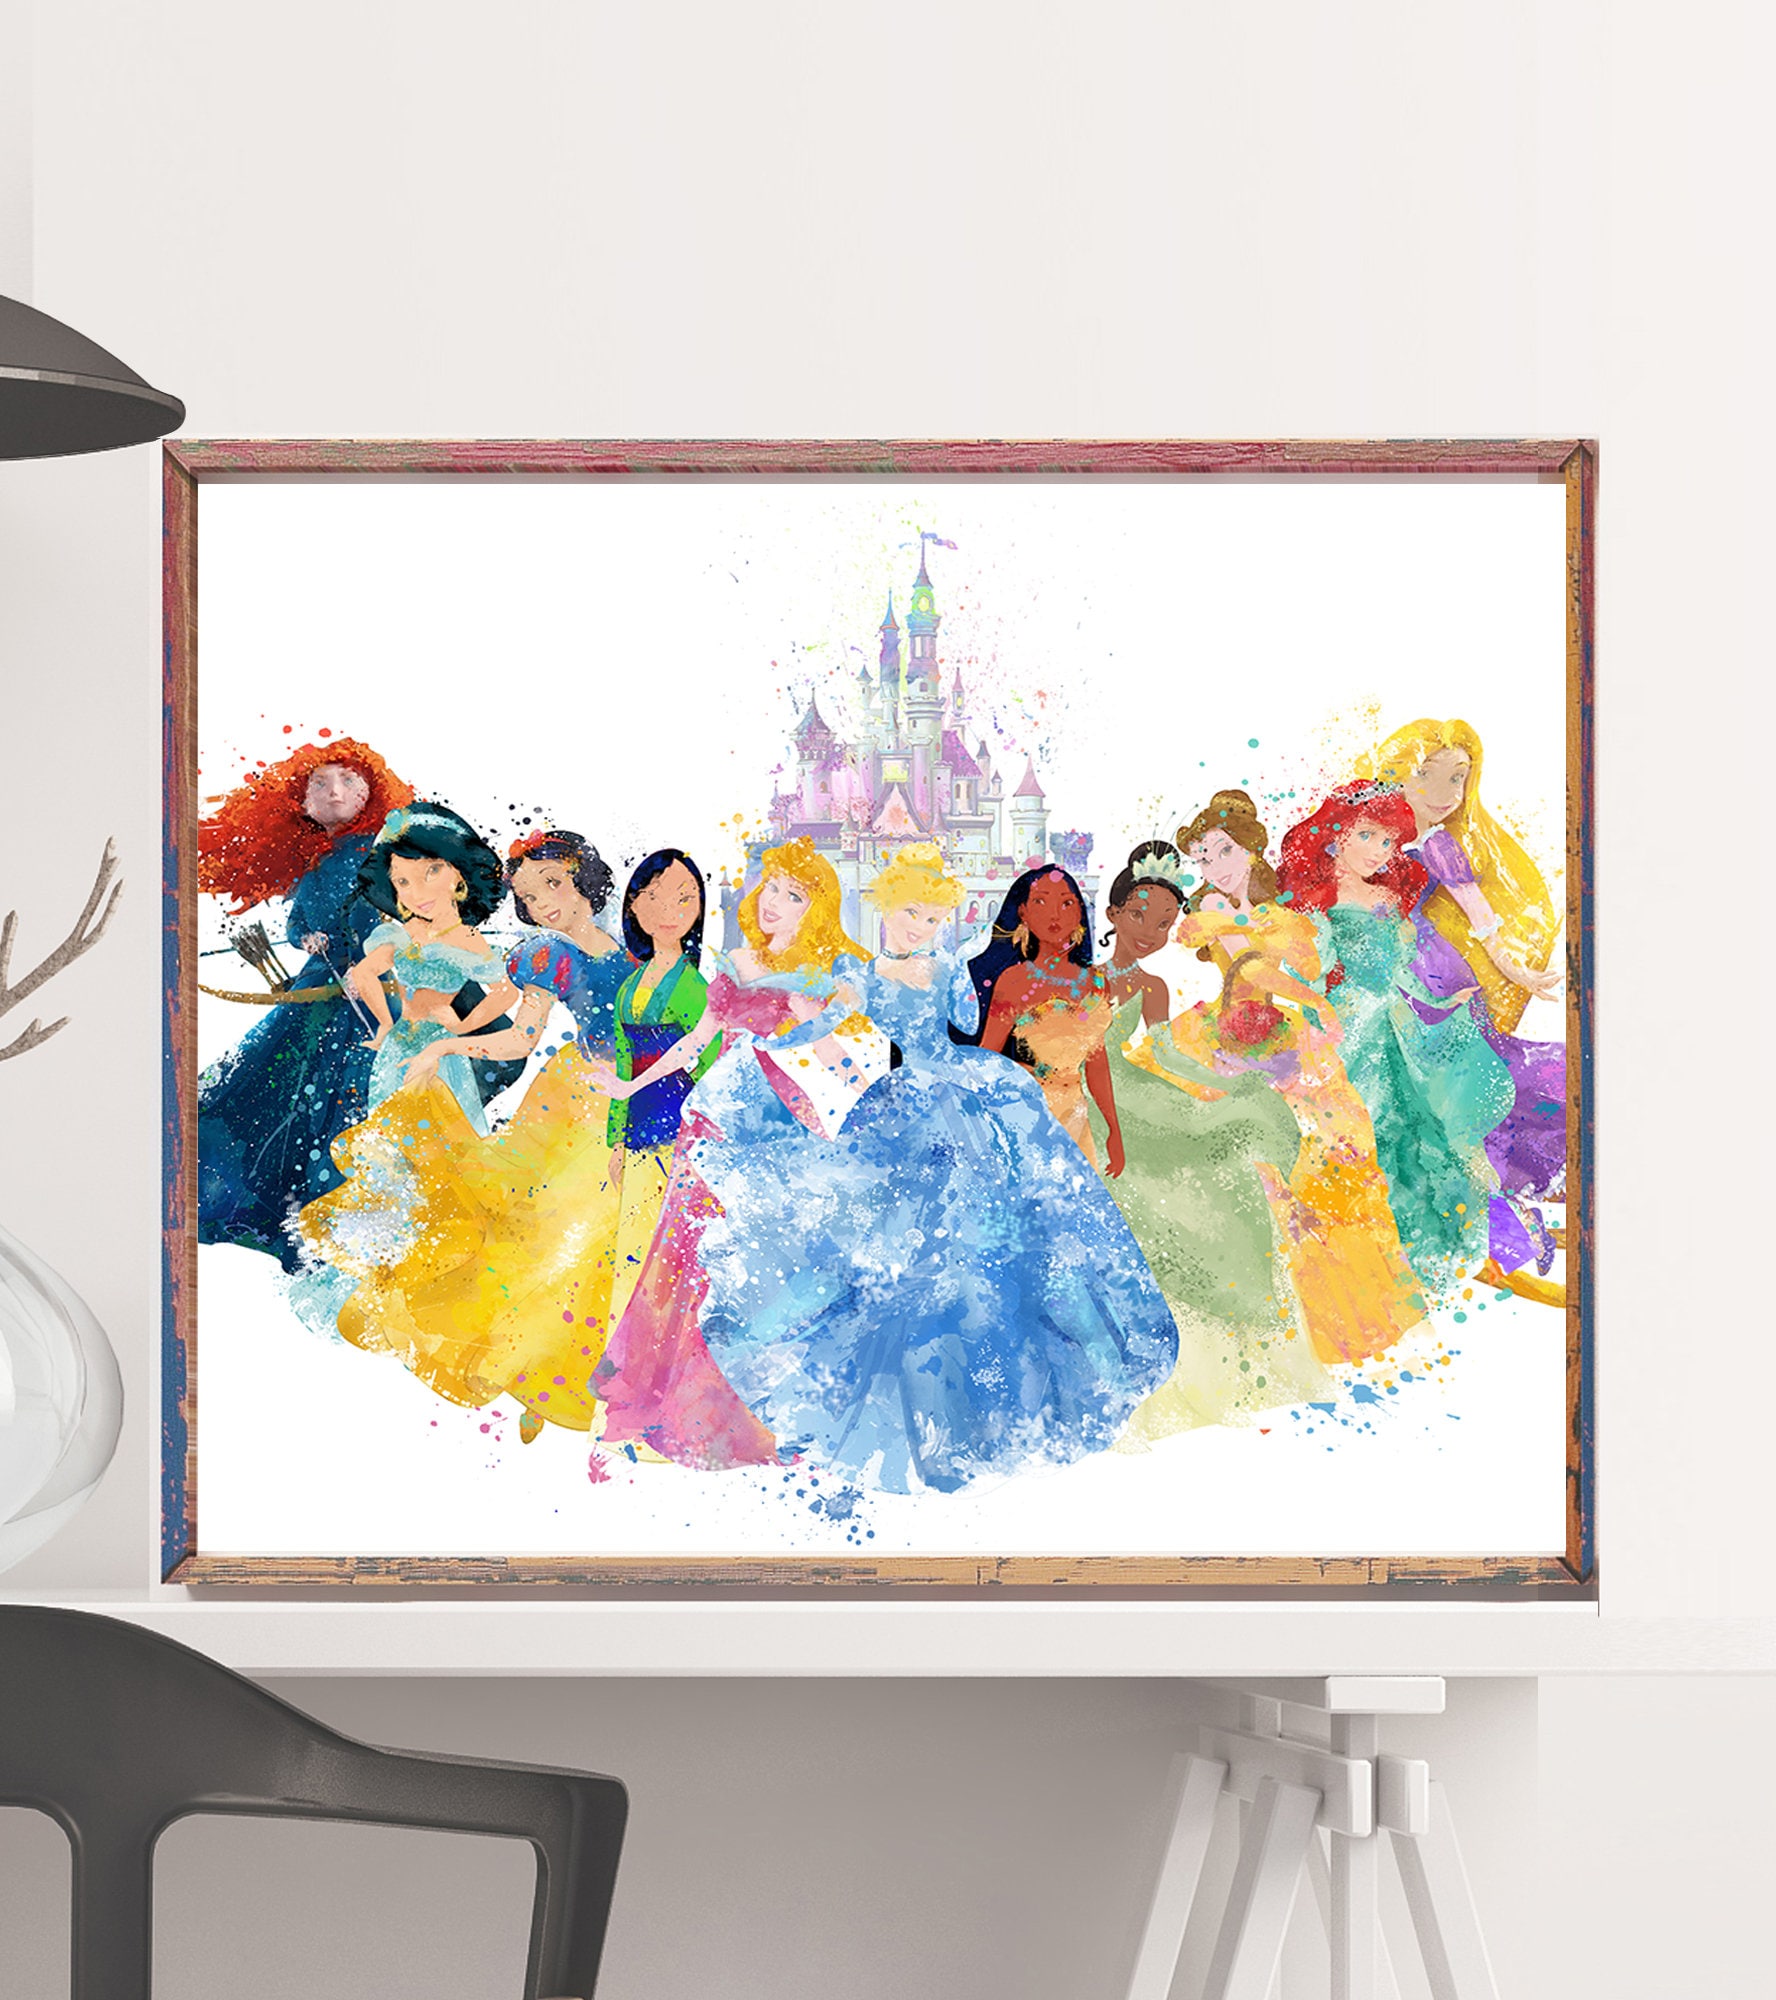 Princess Coloring Book For Girls: Cindrella, Ourora, Belle, Repunzel, Elsa,  Anna, Merida, Little Mermaid, Pocahontas My Favorite Princesses In One Boo  (Paperback)